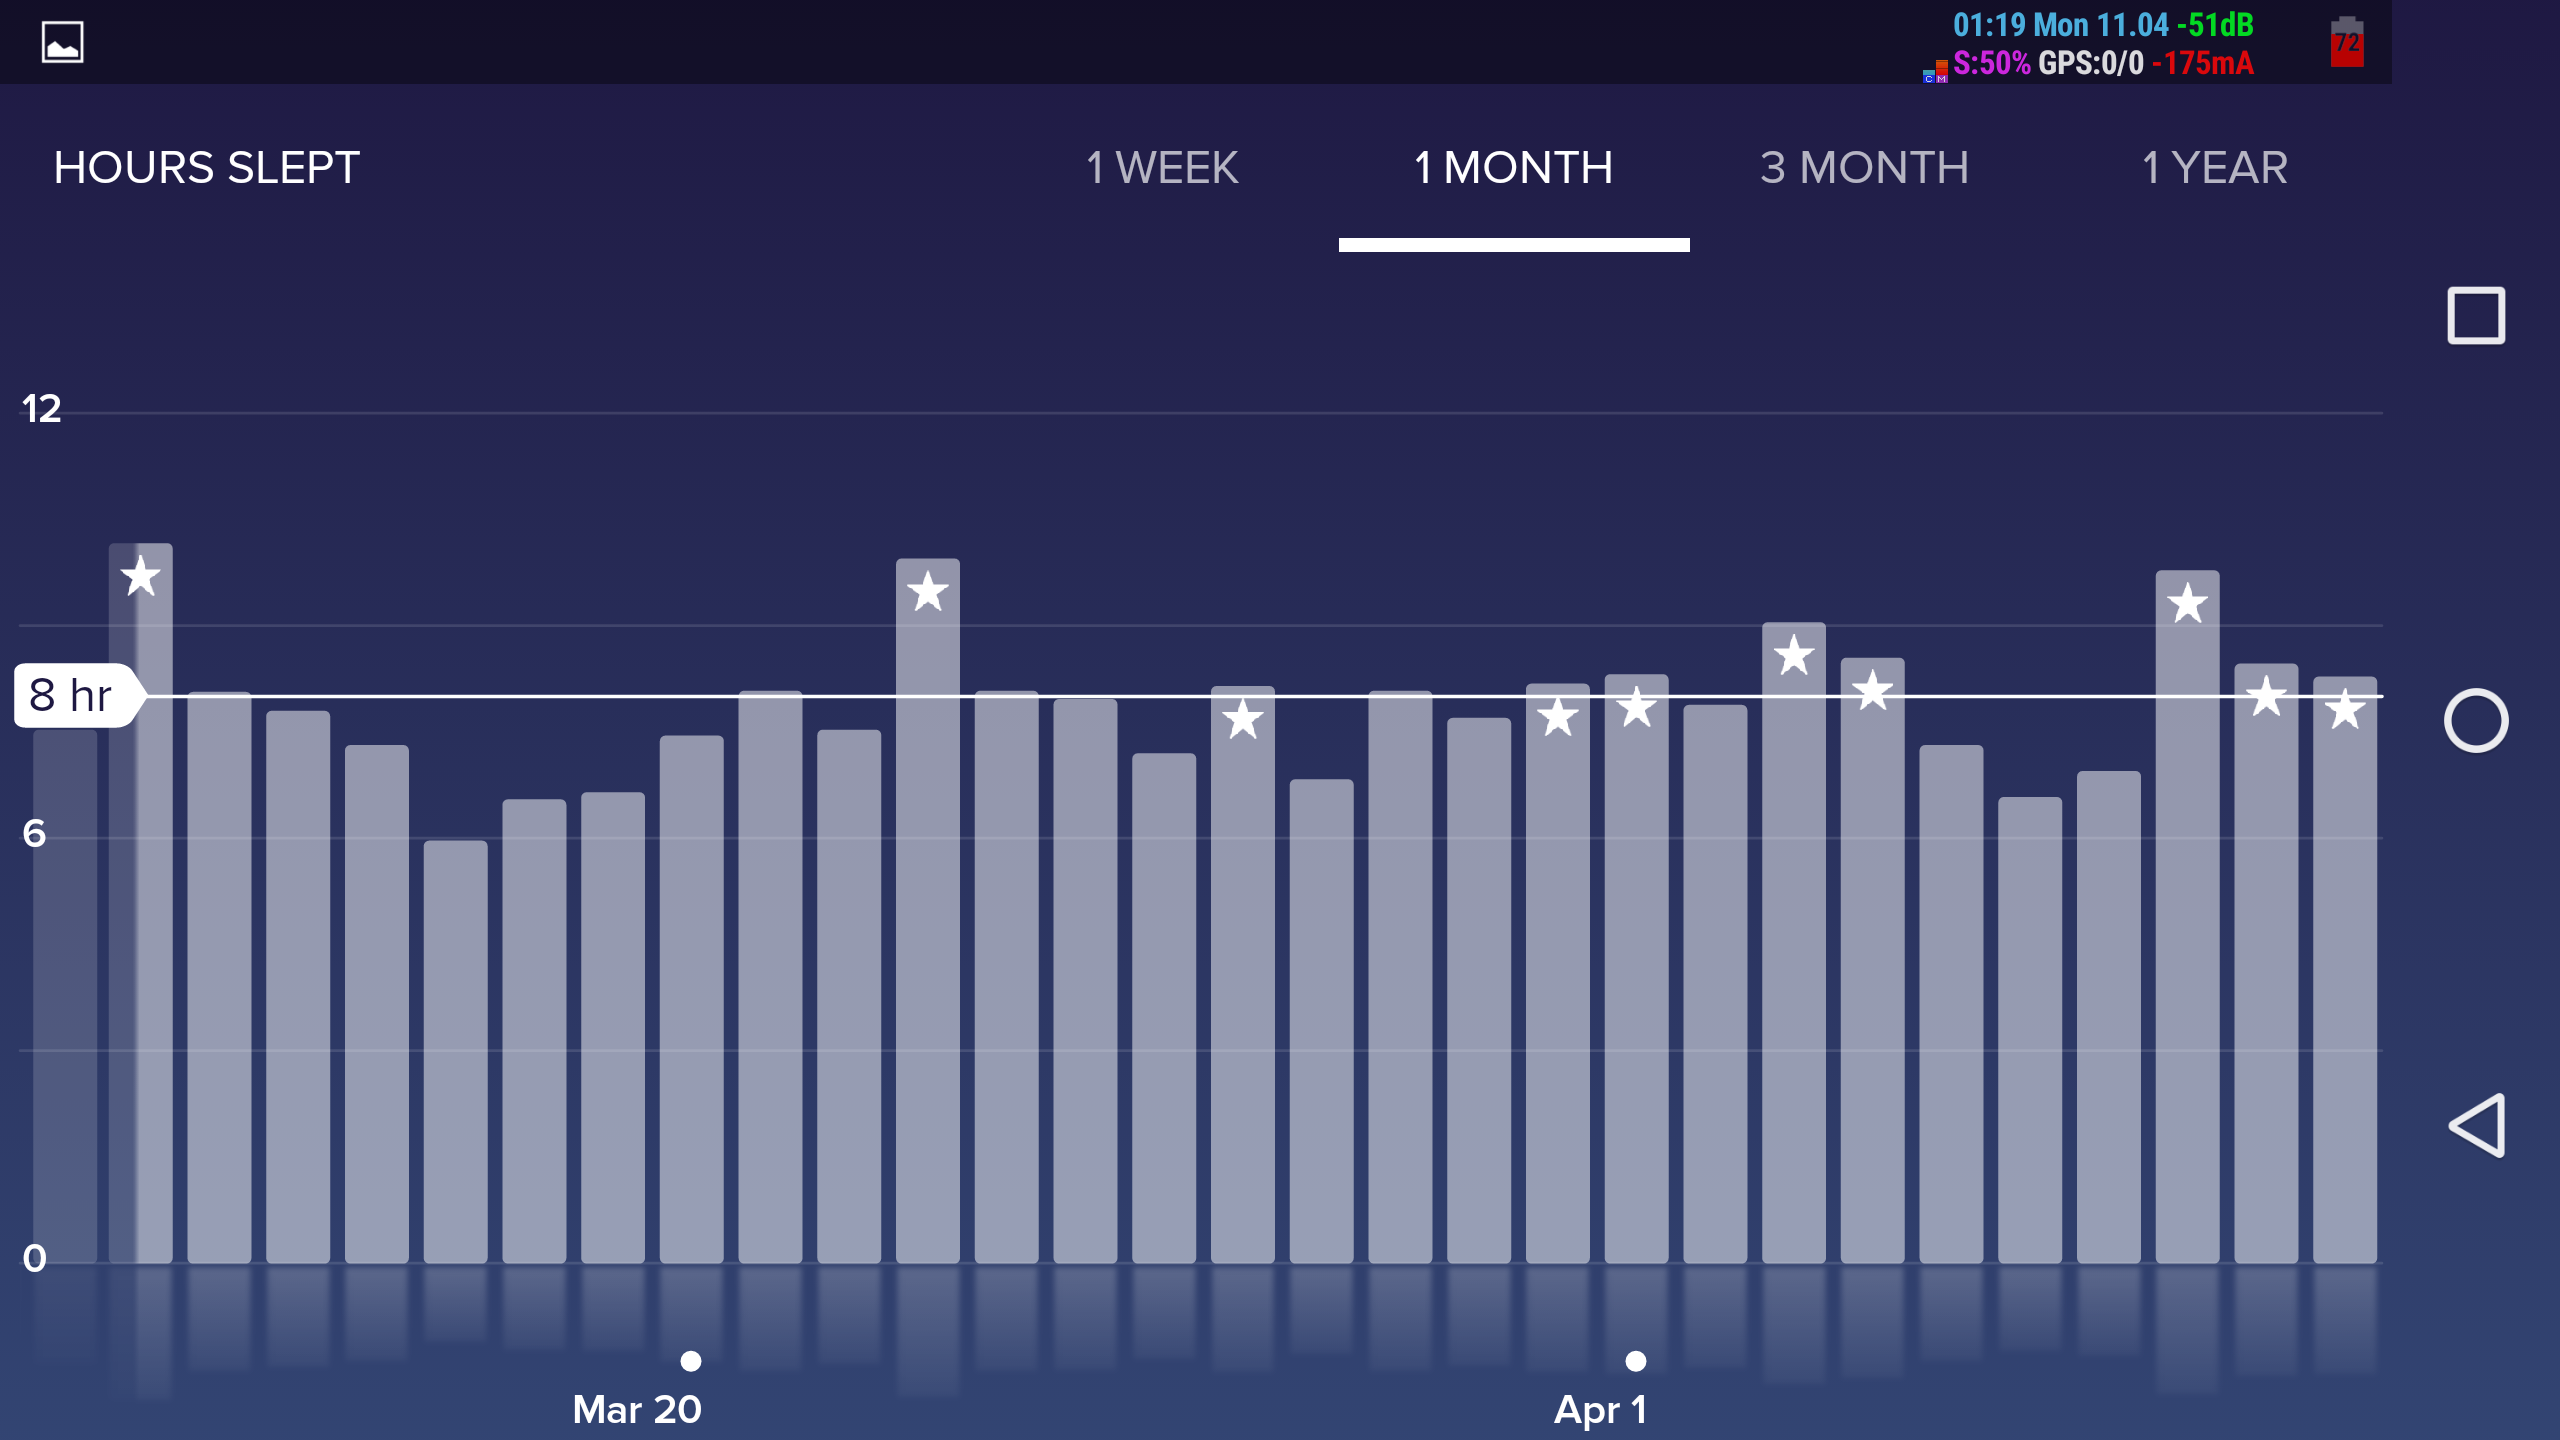 Sleep history: 1 month